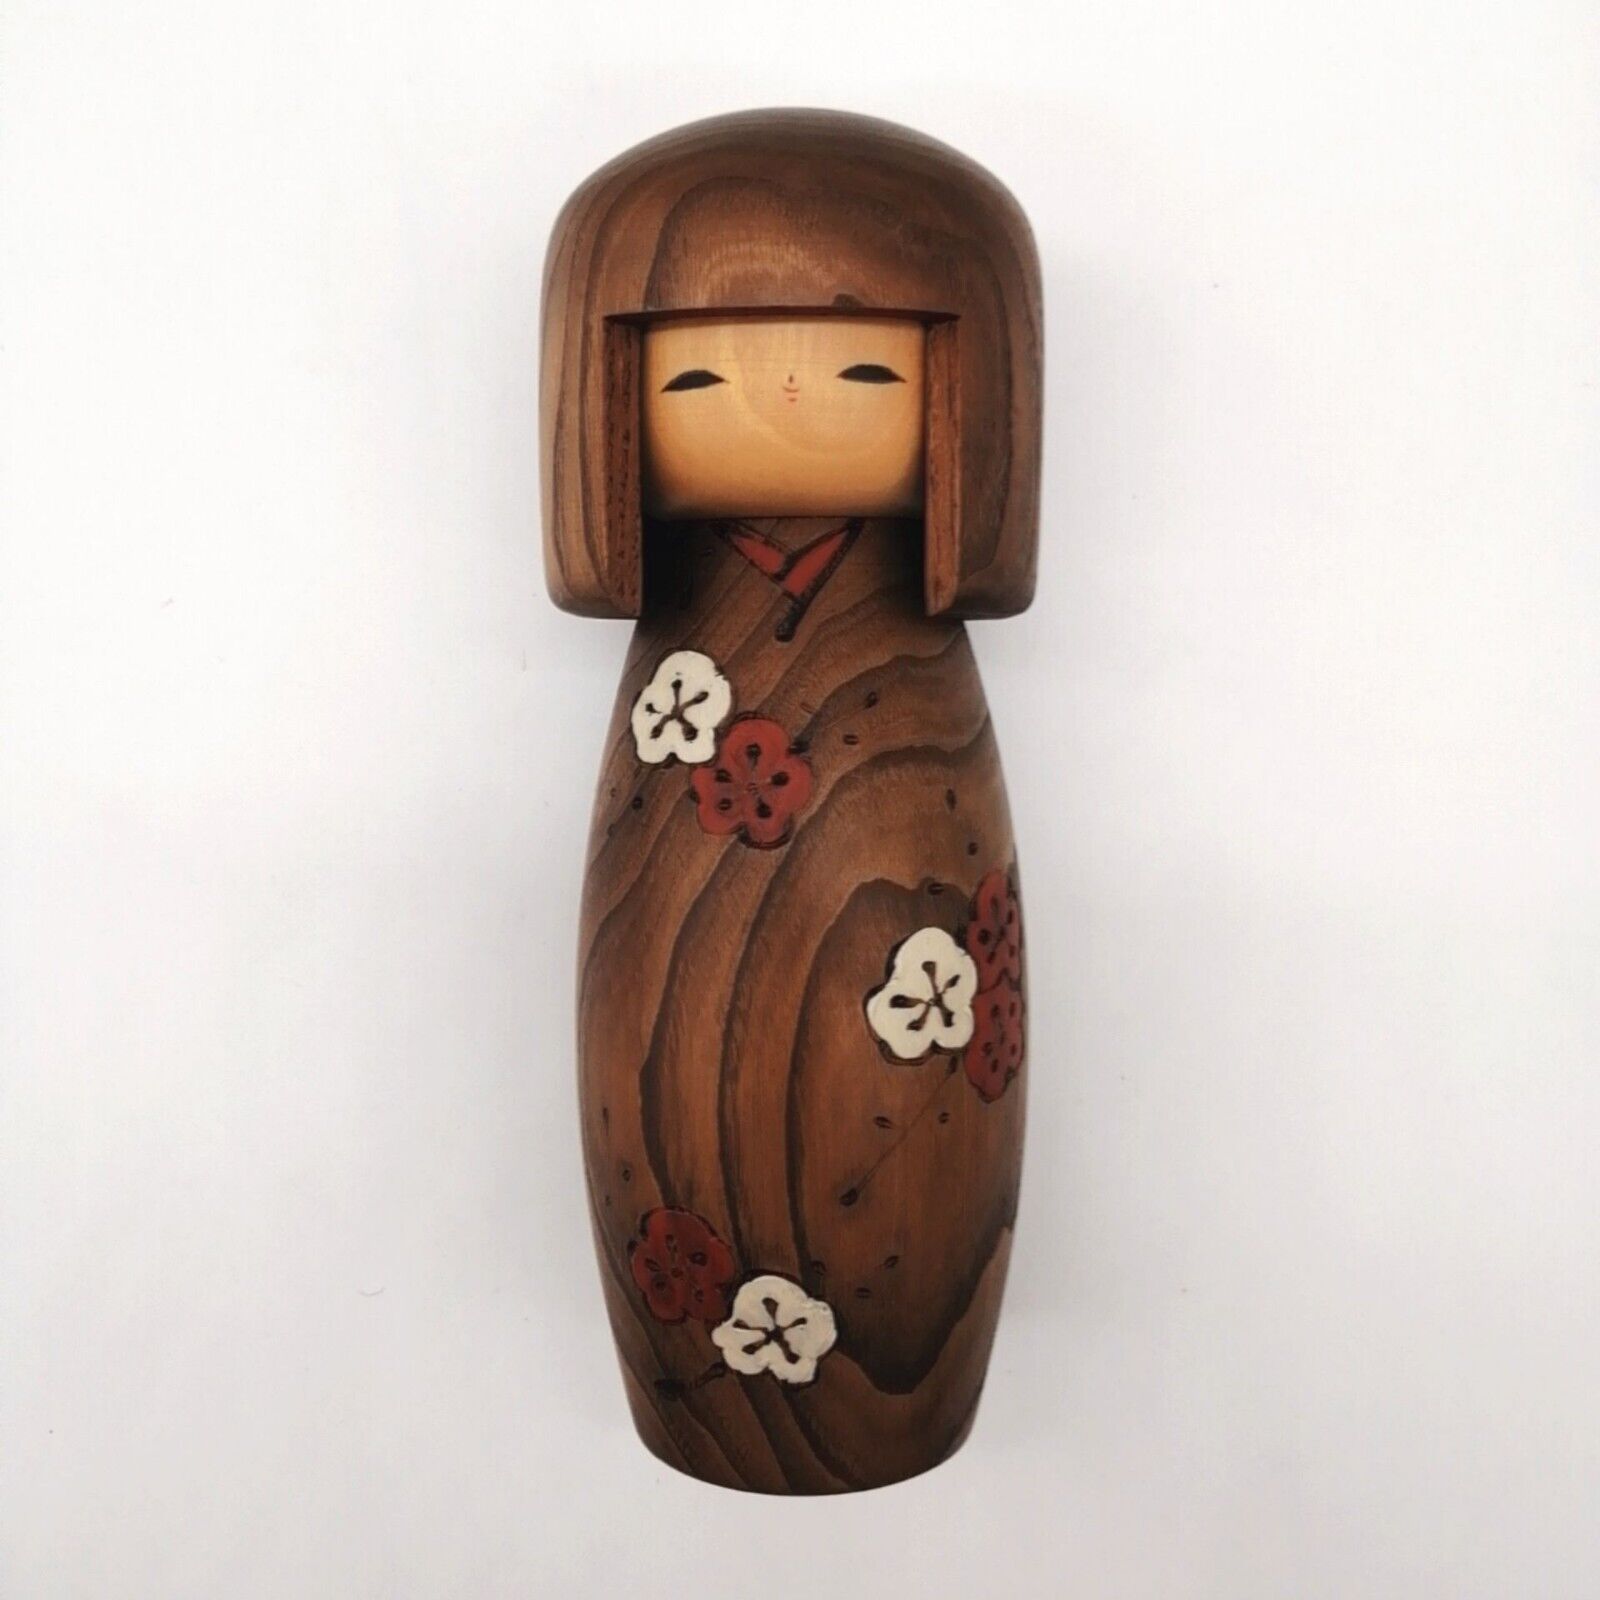 24cm Japanese Creative KOKESHI Doll Vintage by USABURO Signed Interior KOB680